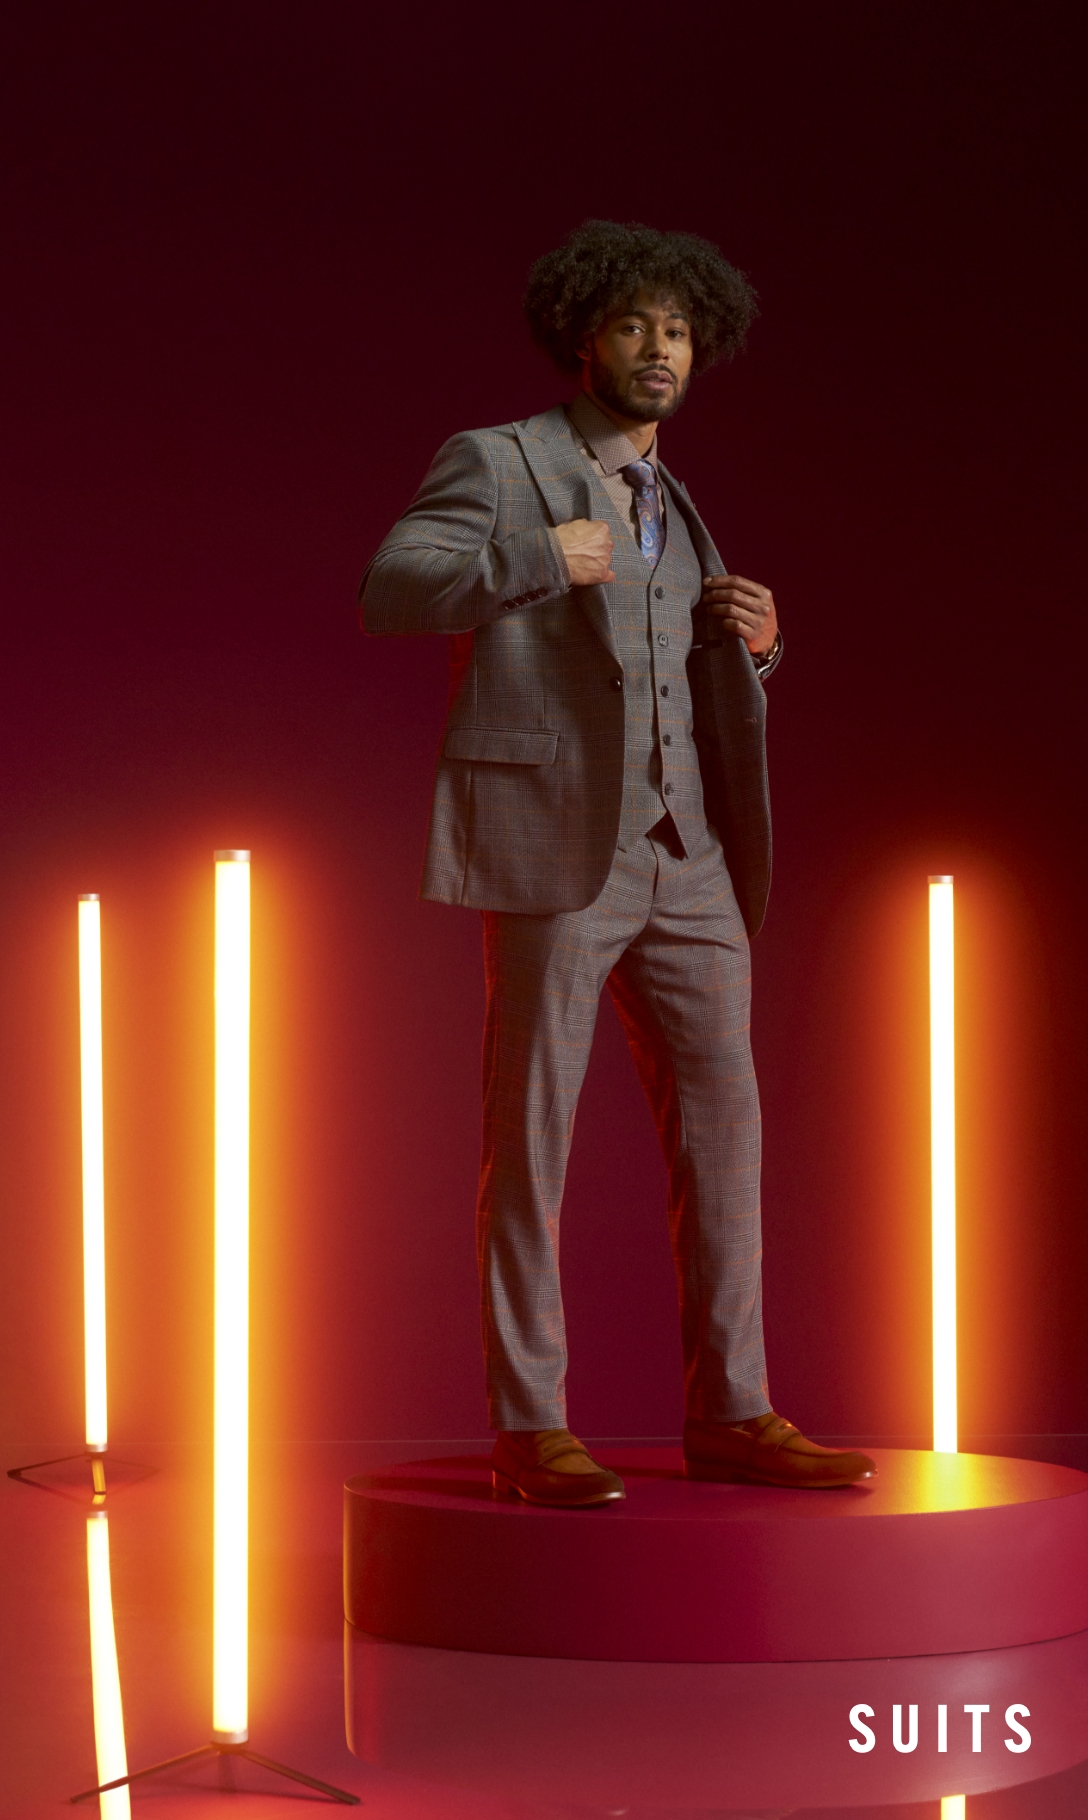 Men's Suits category. Image features a grey plaid Stacy Adams suit.